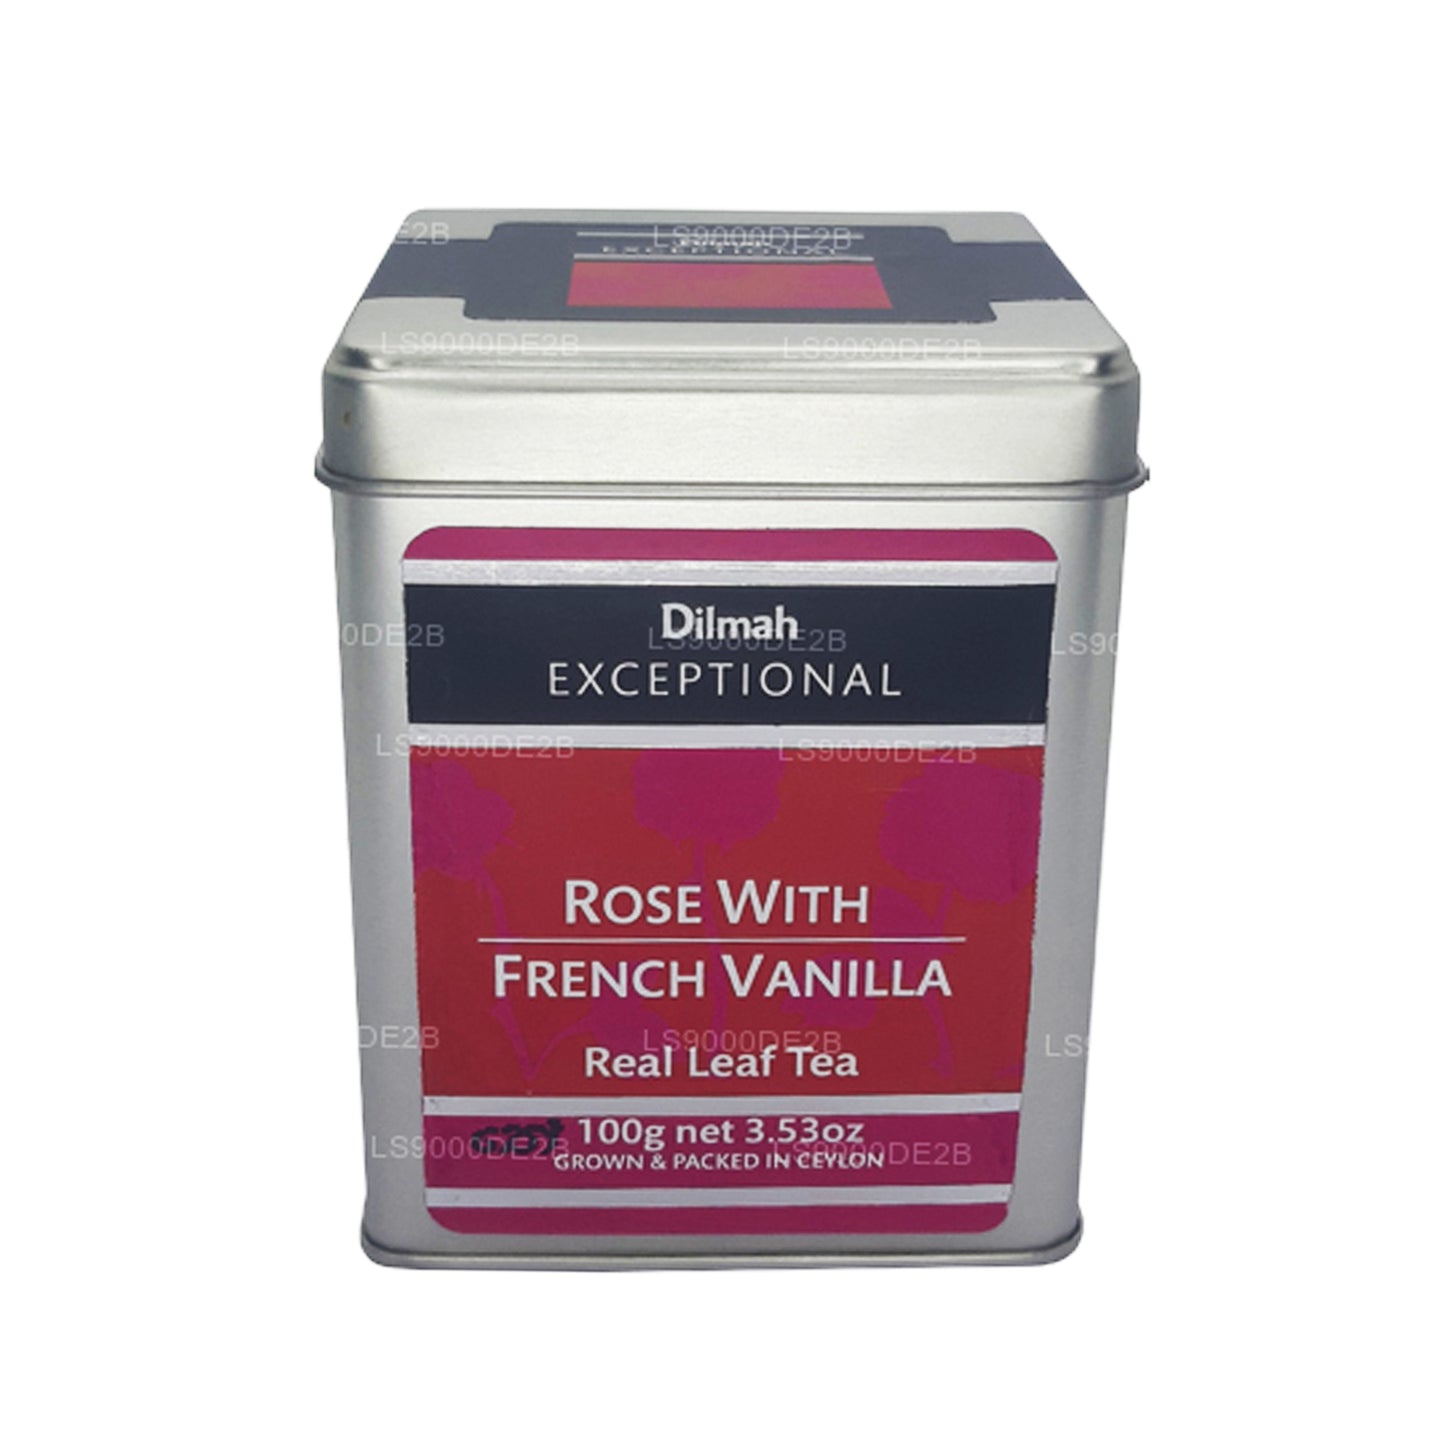 Té Dilmah Exceptional Rose con hojas reales de vainilla francesa (40 g) 20 bolsitas de té